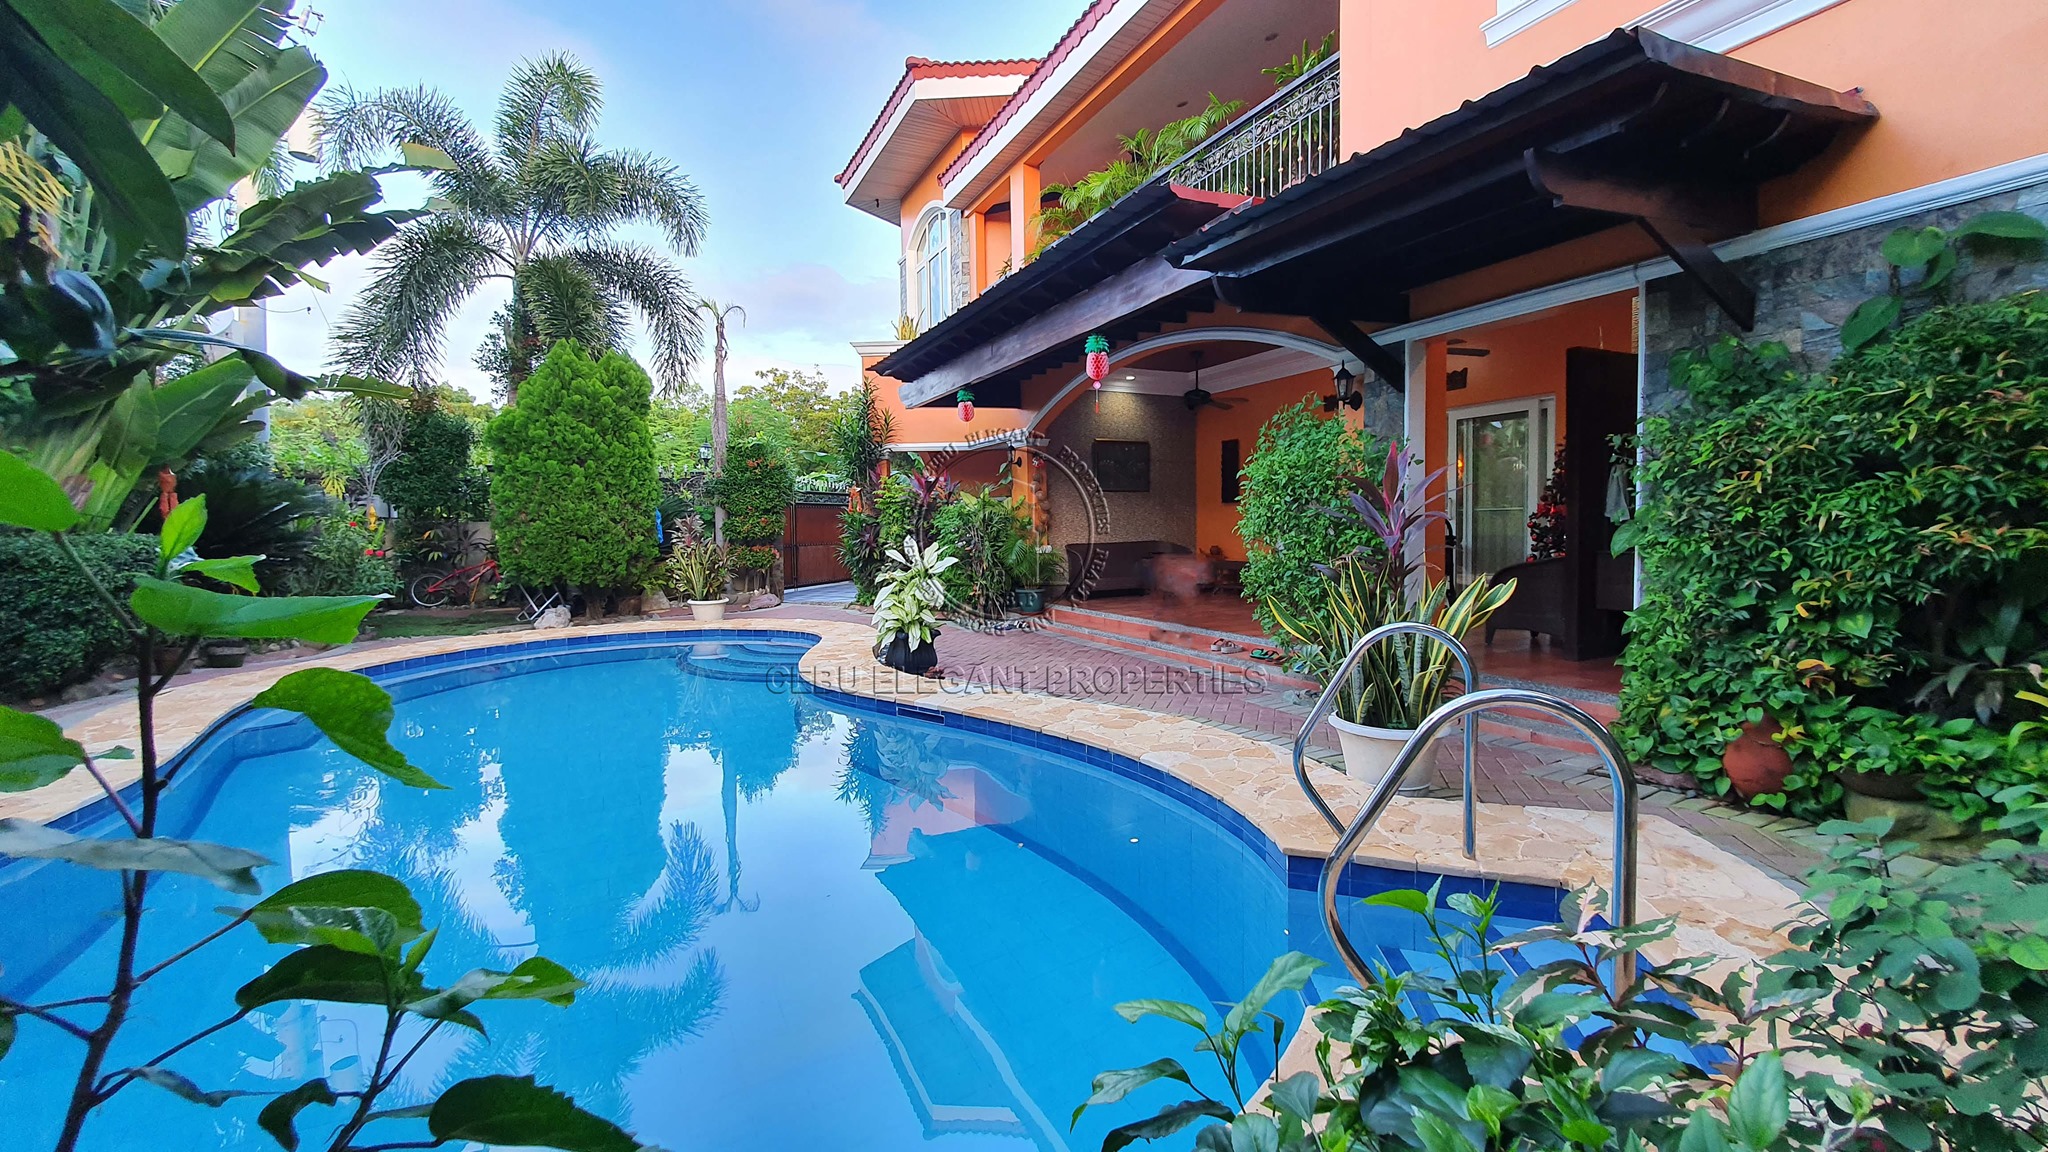 Hidden Oasis House and Lot in the Island of Lapu-lapu City, Cebu